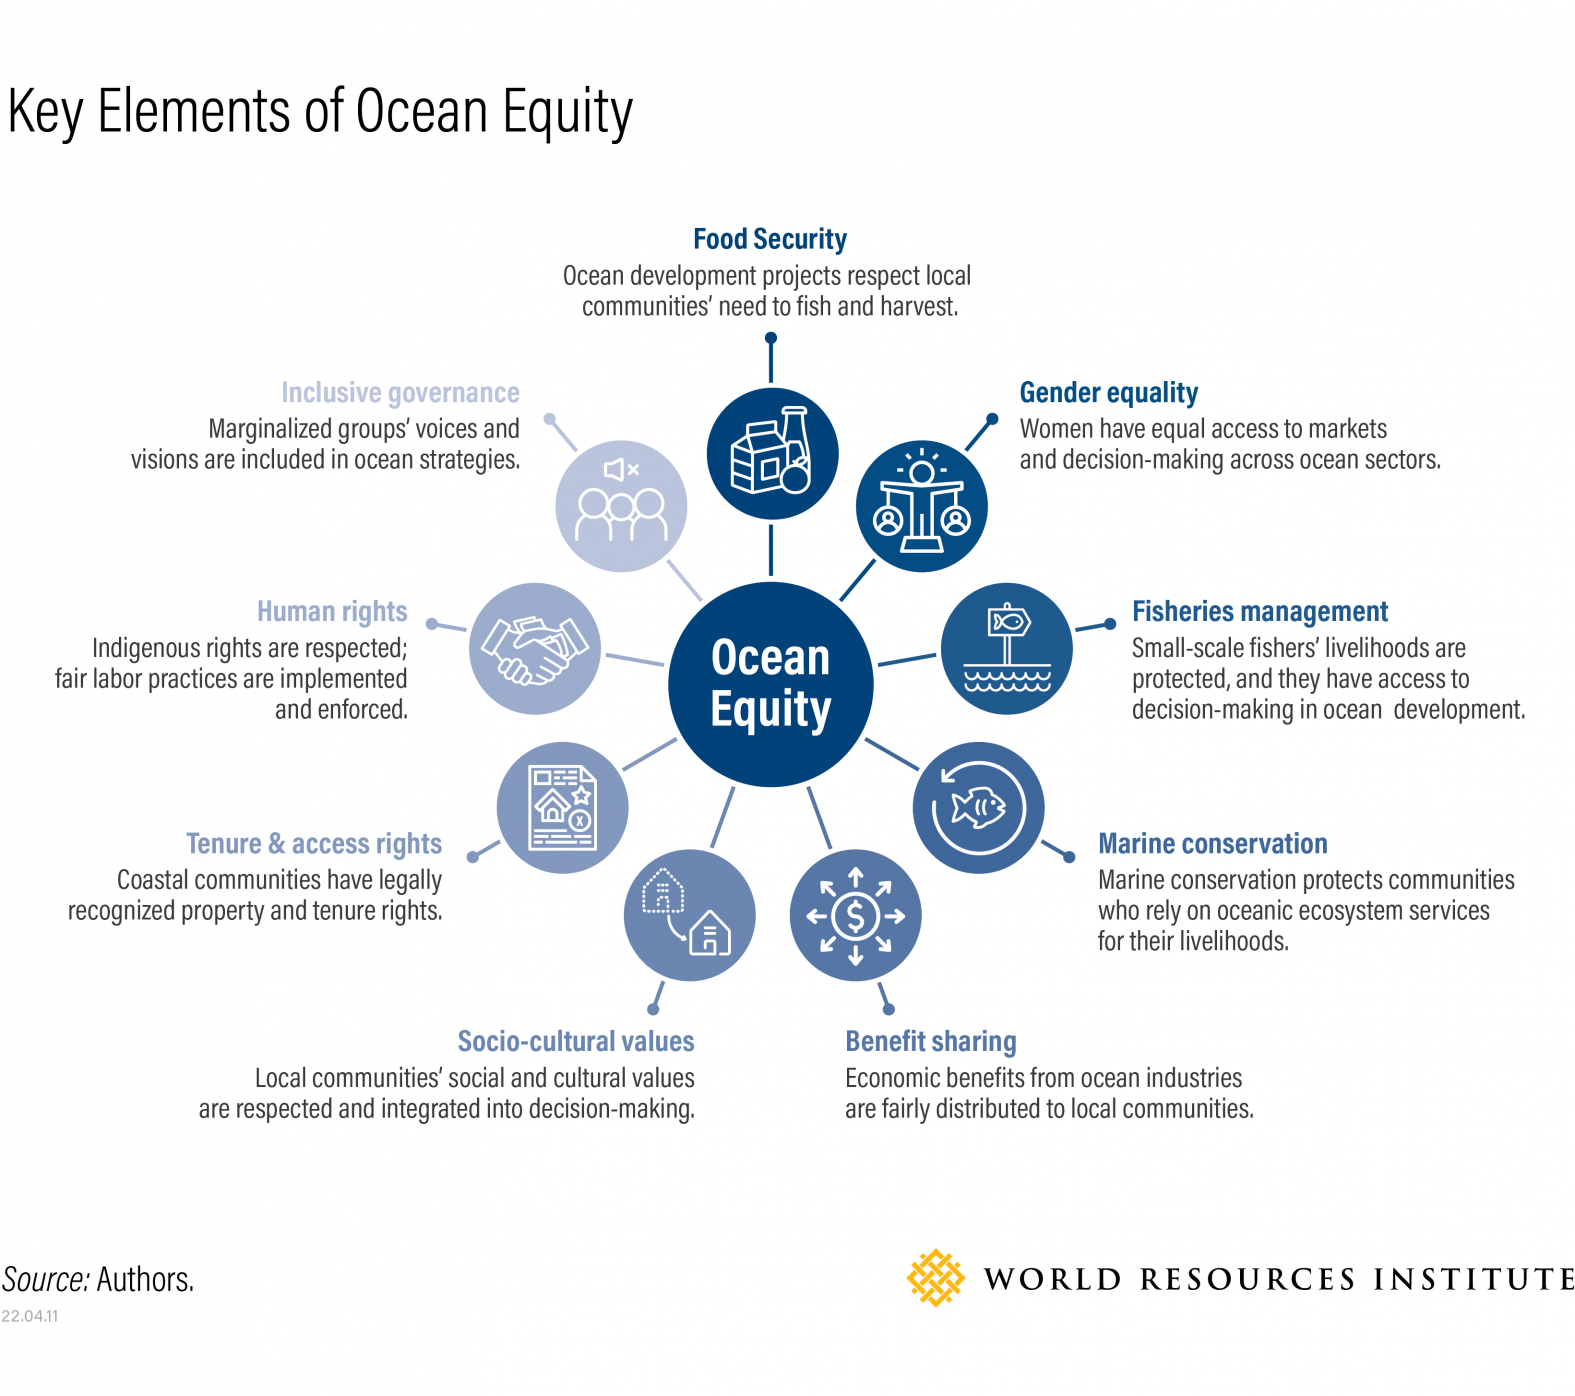 Diagram shows elements of ocean equity